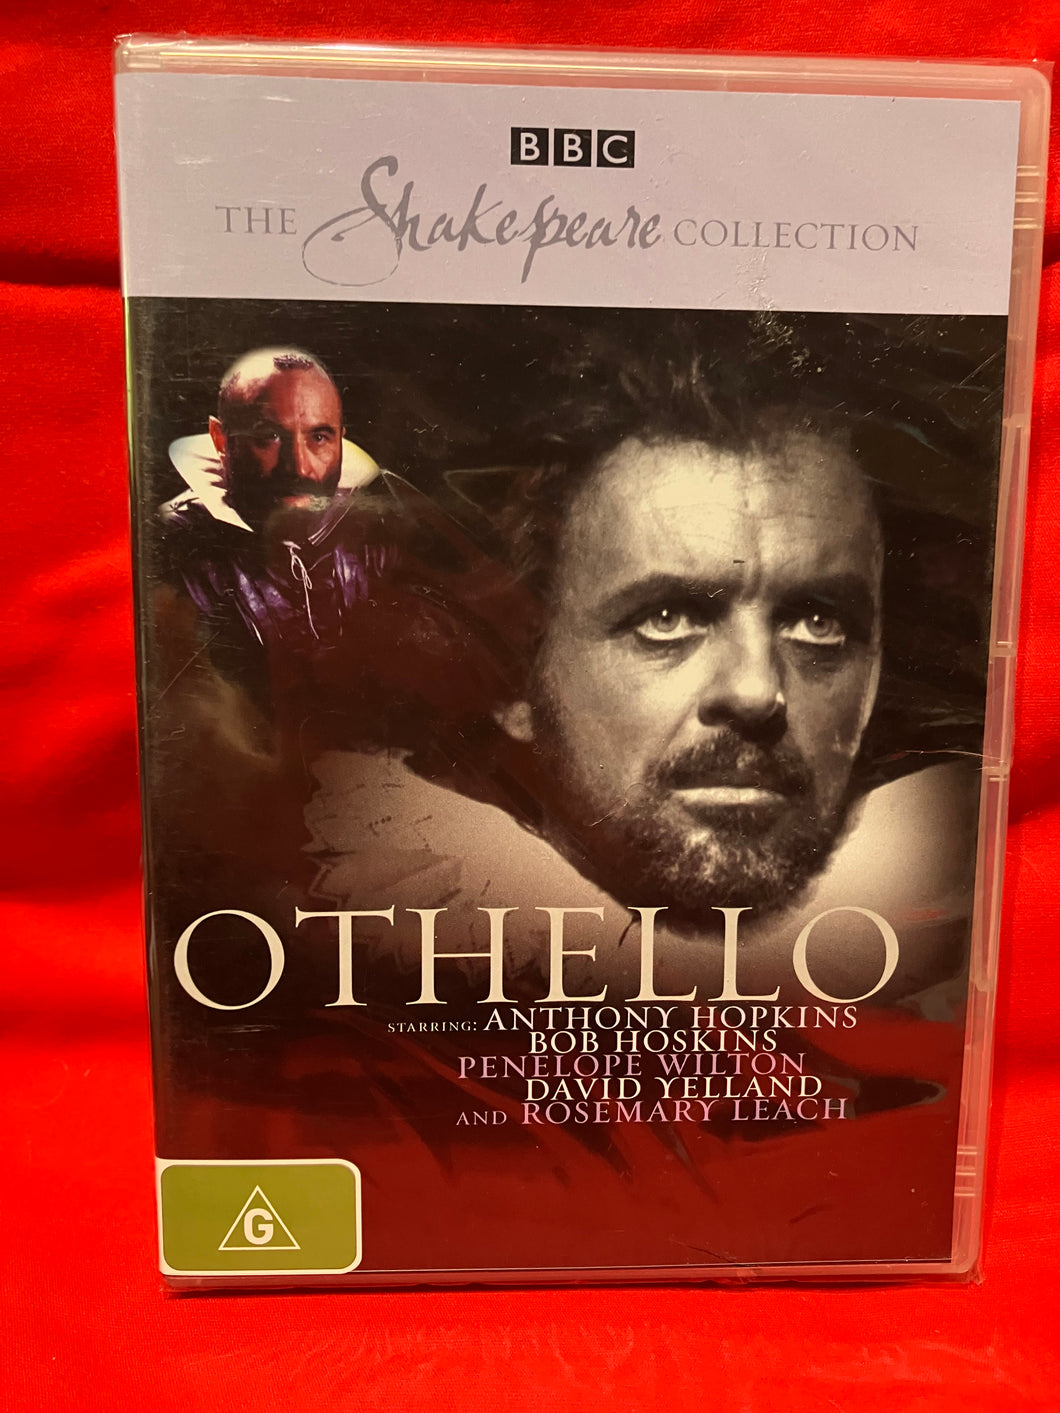 OTHELLO - SHAKESPEARE COLLECTION - DVD (SEALED)